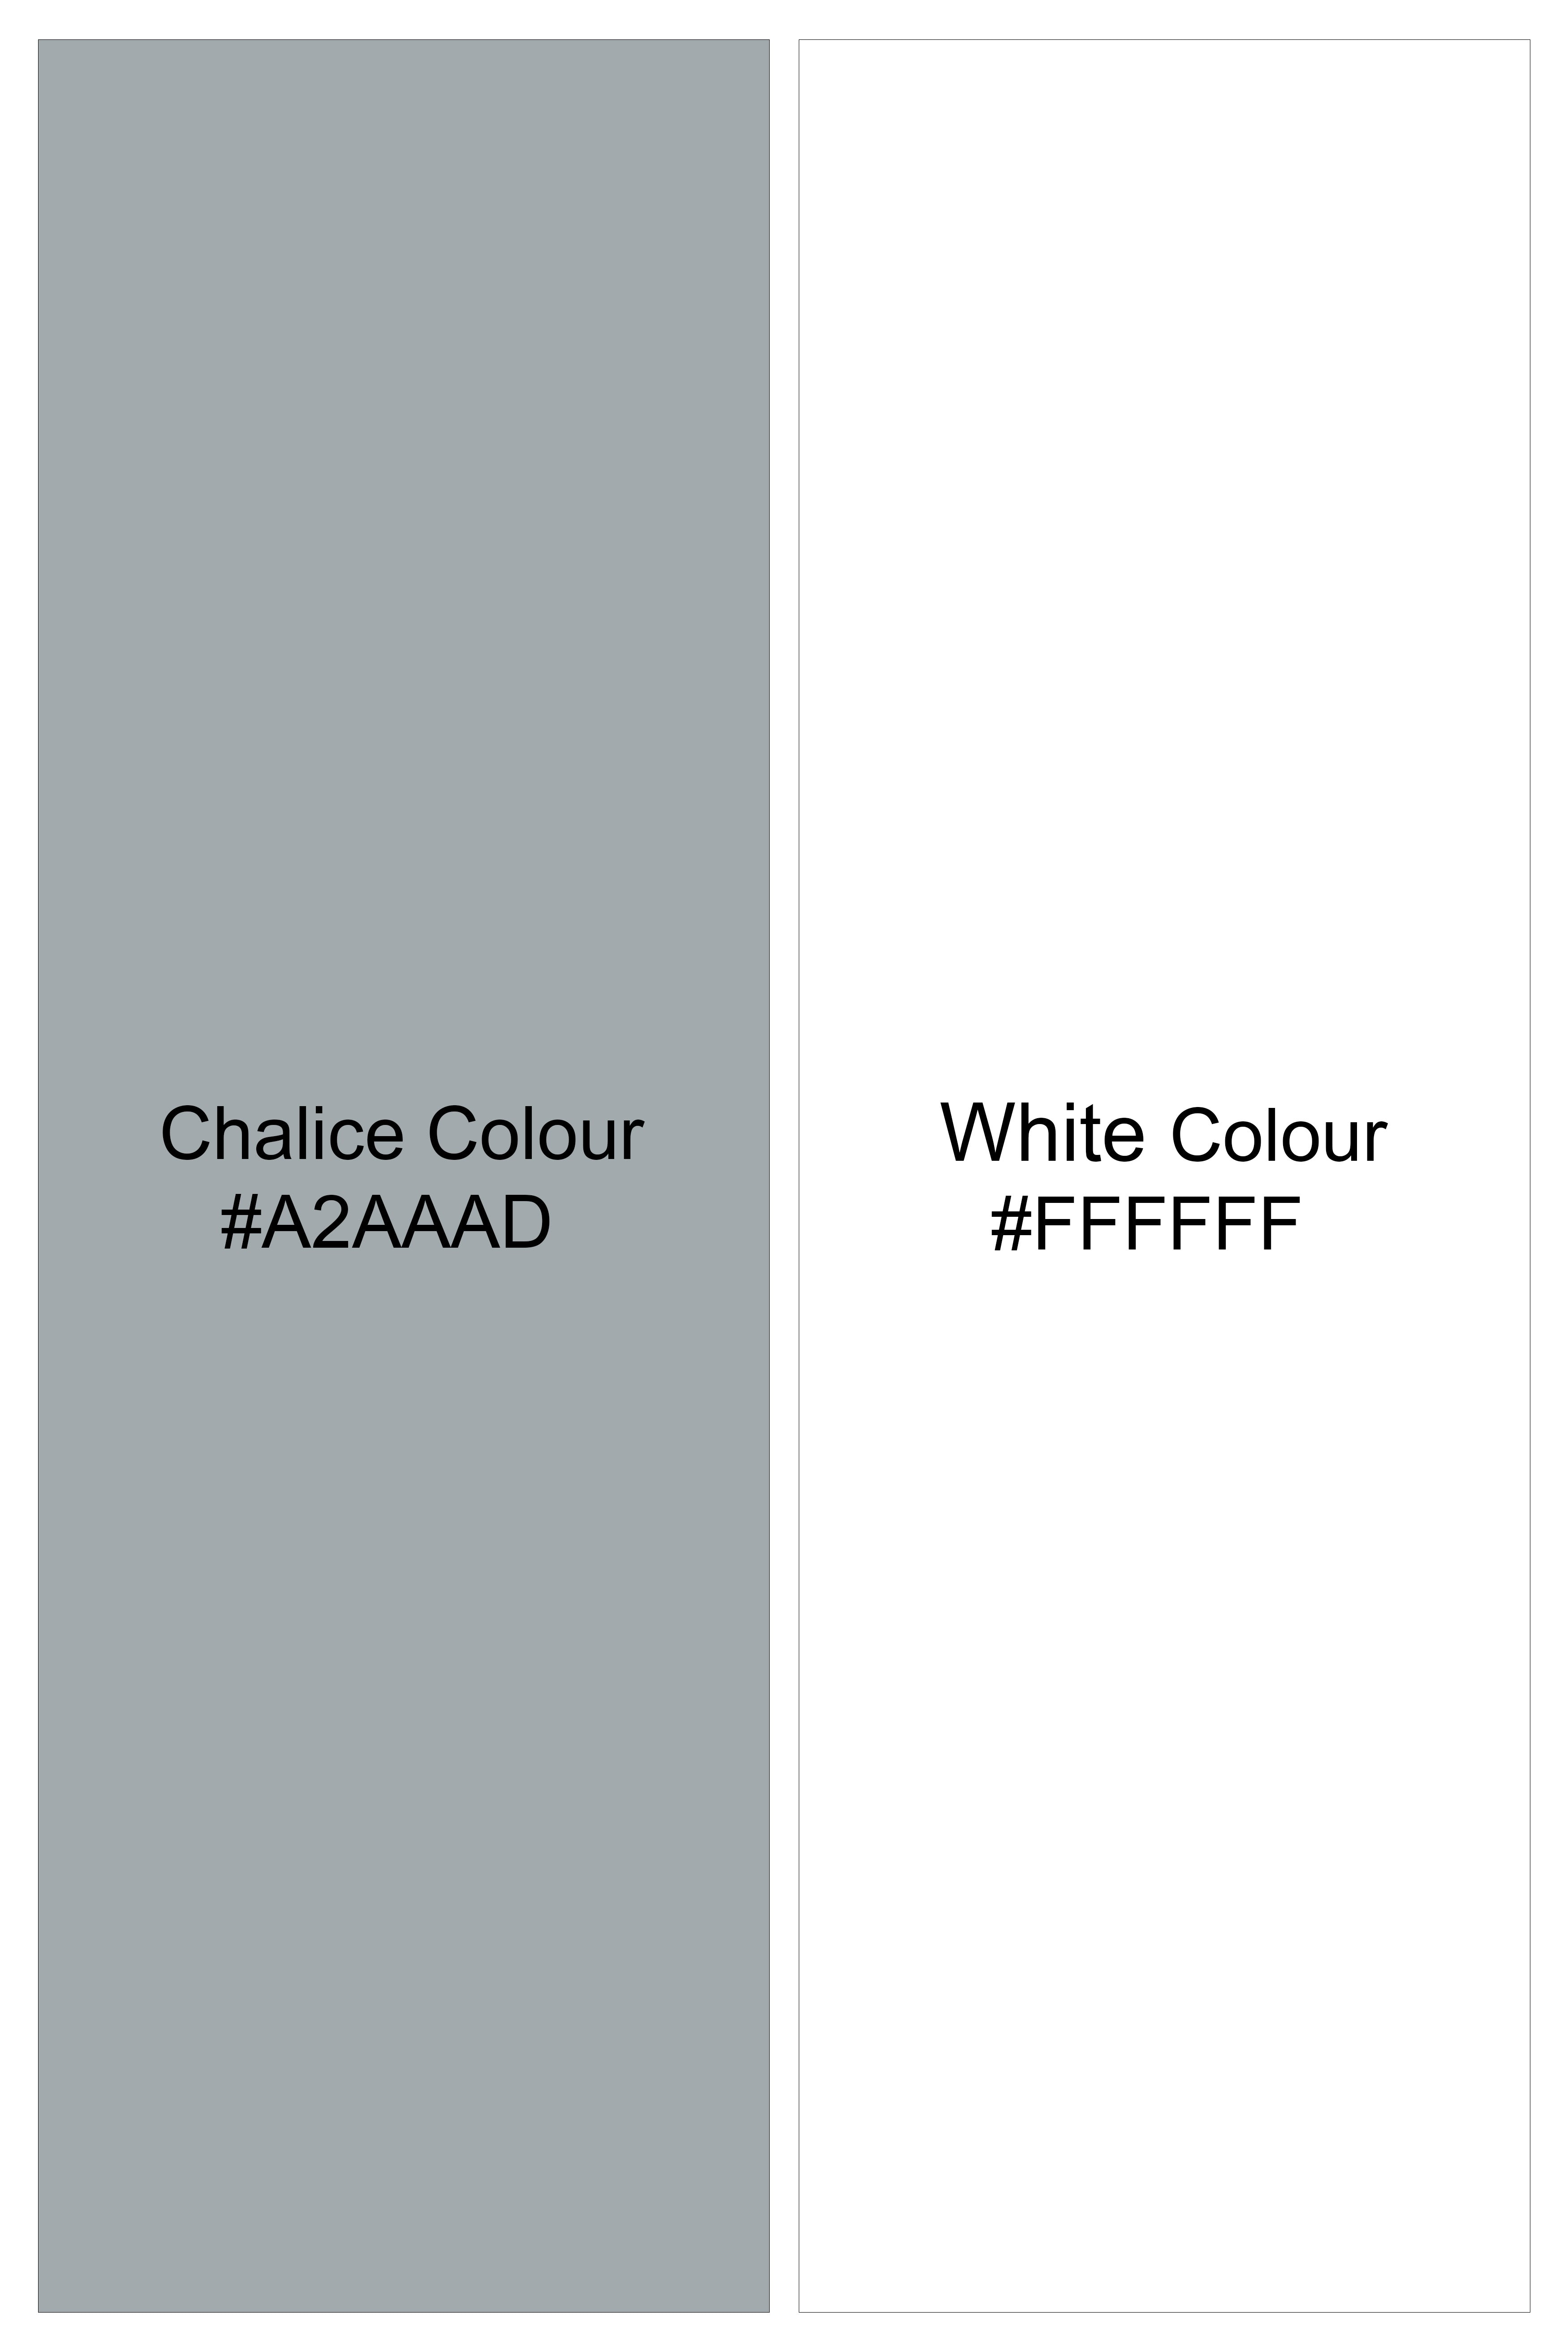 Chalice Gray with White Printed and Pineapple Embroidered Premium Cotton Designer Kurta Shirt 5684-KS-E204-38, 5684-KS-E204-H-38, 5684-KS-E204-39, 5684-KS-E204-H-39, 5684-KS-E204-40, 5684-KS-E204-H-40, 5684-KS-E204-42, 5684-KS-E204-H-42, 5684-KS-E204-44, 5684-KS-E204-H-44, 5684-KS-E204-46, 5684-KS-E204-H-46, 5684-KS-E204-48, 5684-KS-E204-H-48, 5684-KS-E204-50, 5684-KS-E204-H-50, 5684-KS-E204-52, 5684-KS-E204-H-52